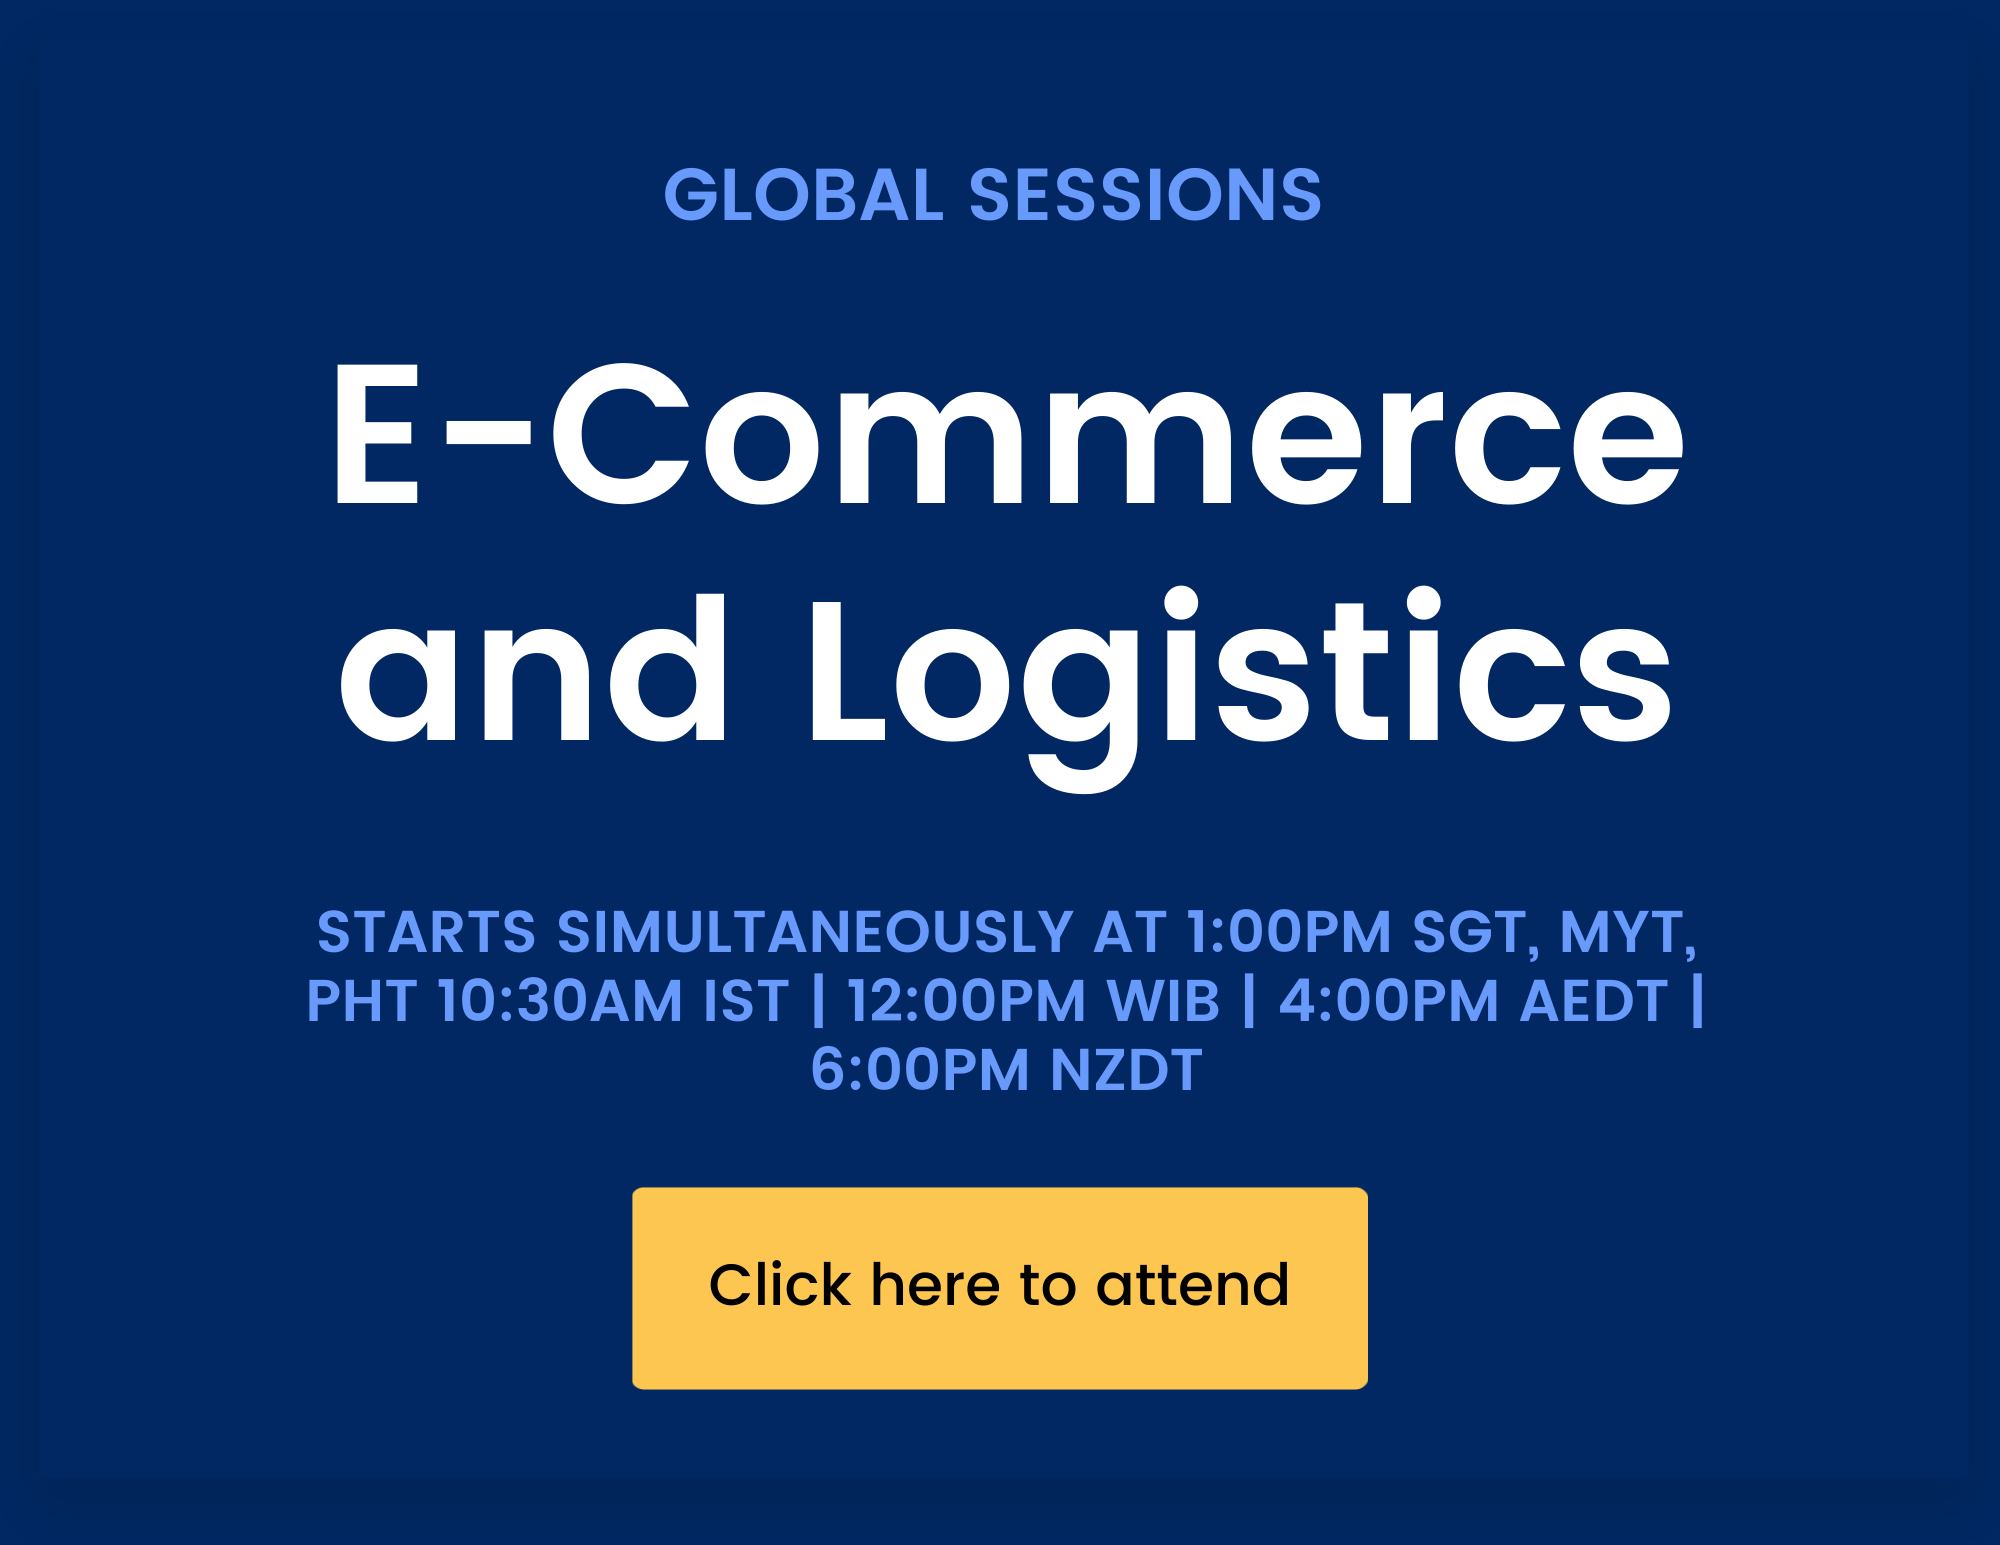 E-Commerce and Logistics Session